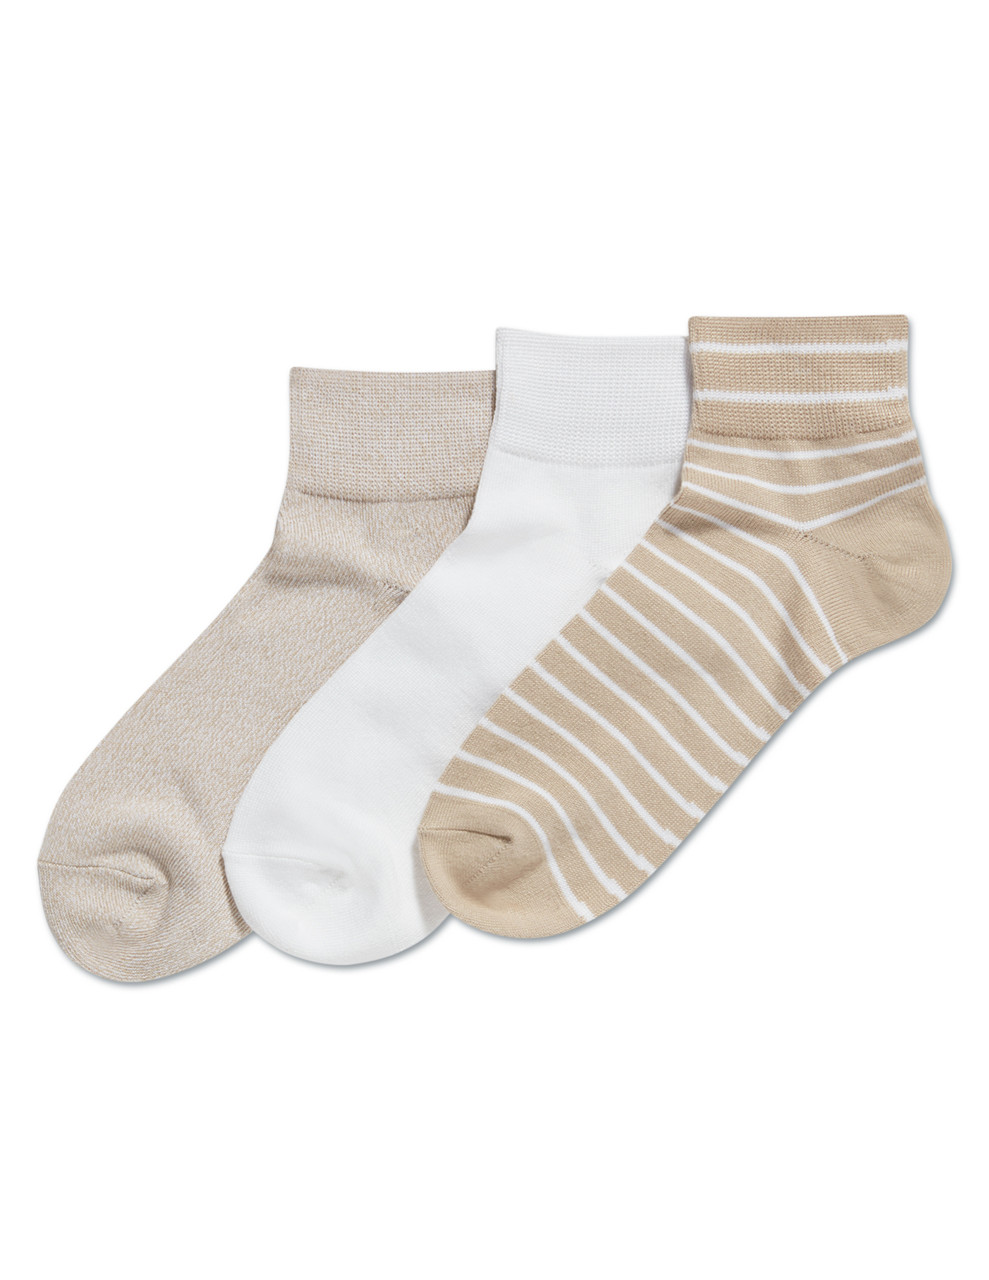 No nonsense Socks Soft & Breathable No Show Cushioned White Size 9-12 - 3  Count - Randalls